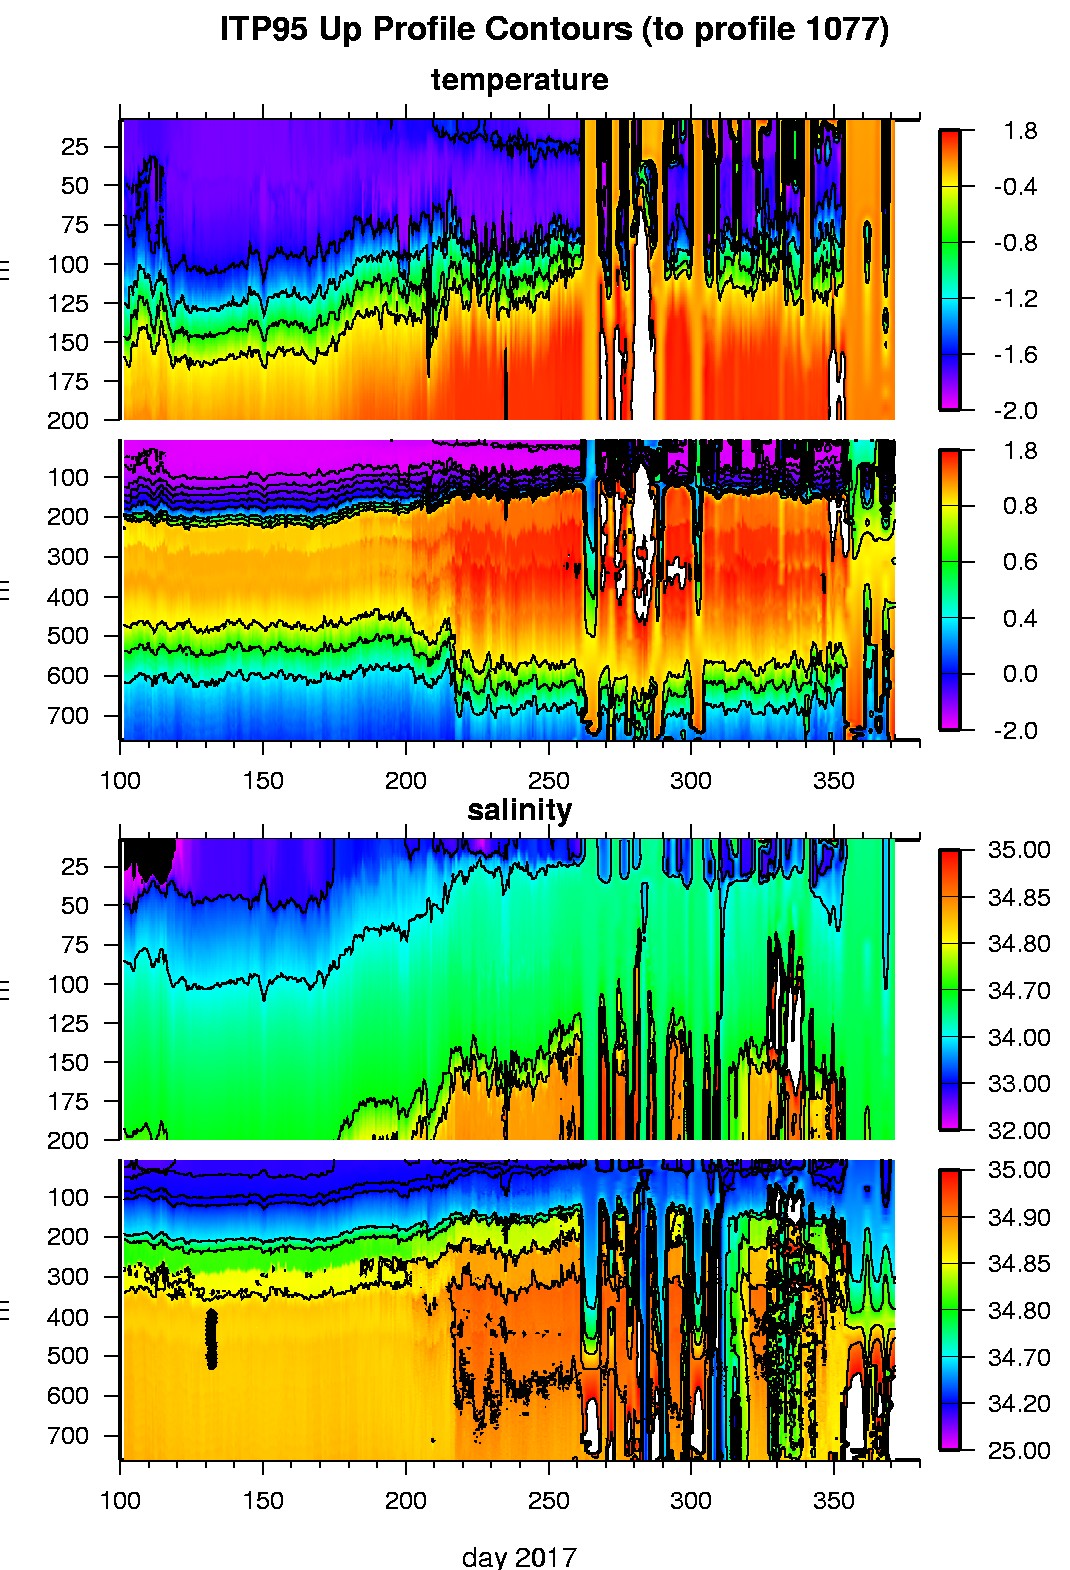 ITP95 temperature and salinity profiles